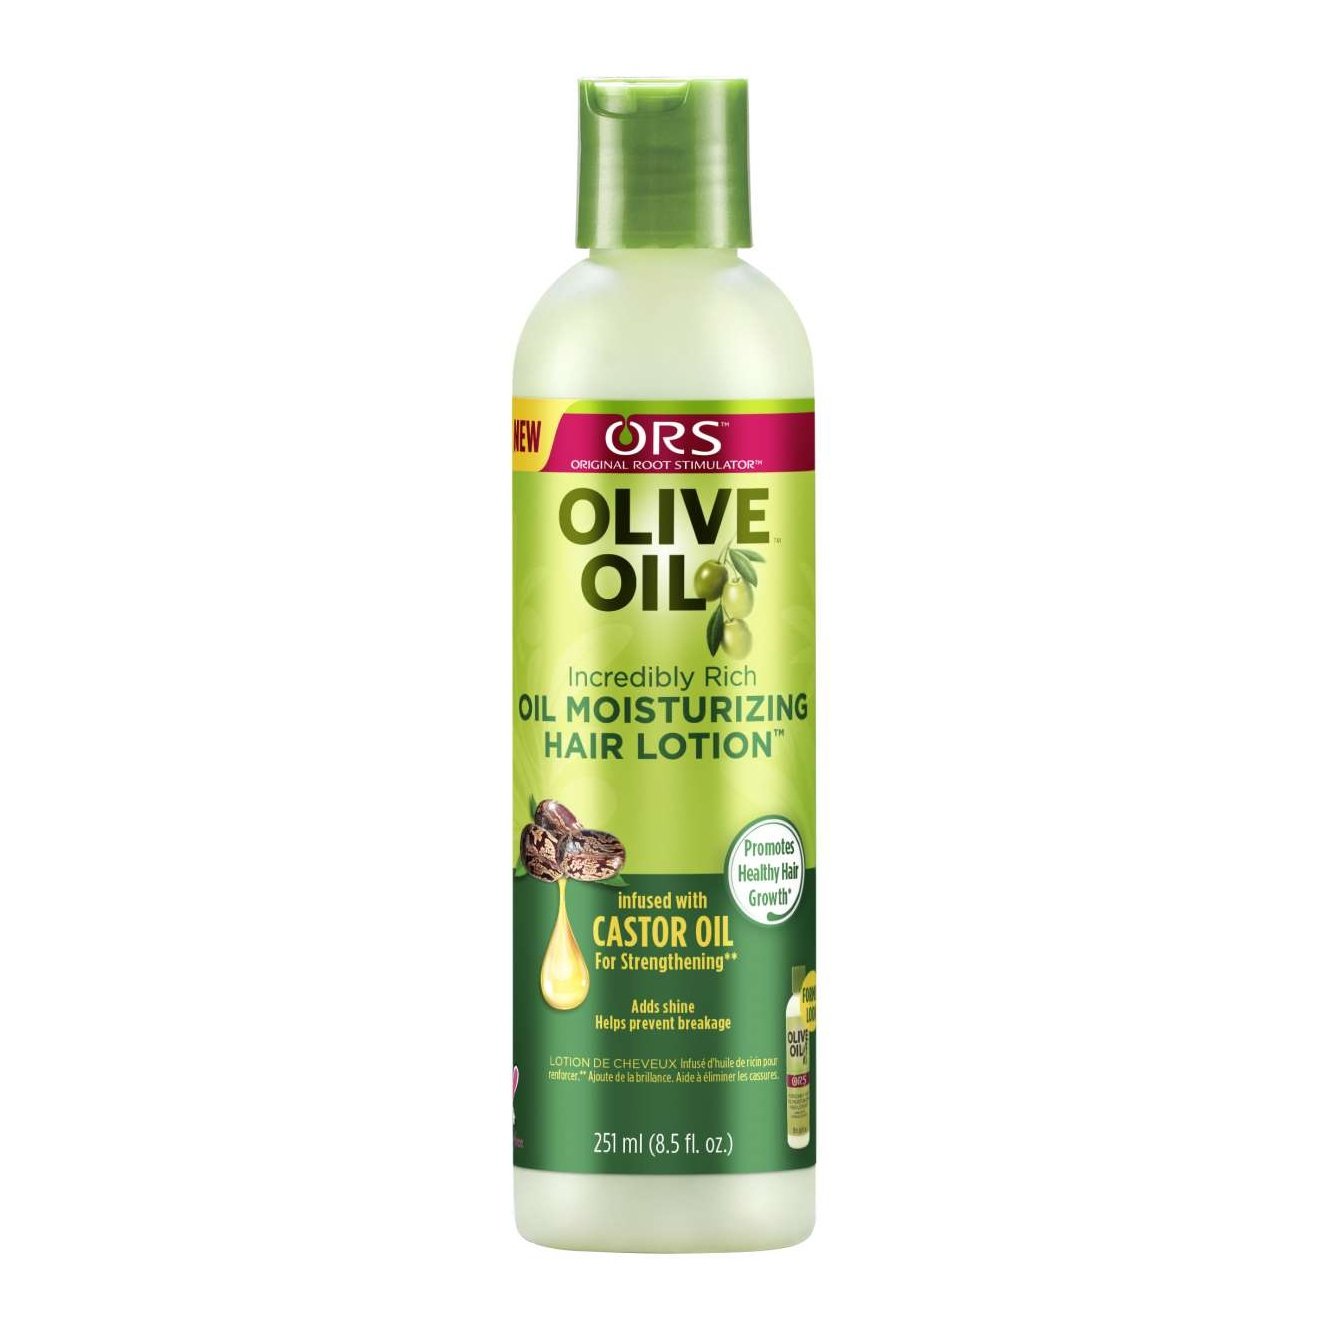 Ors Olive Oil Moisturizing Hair Lotion